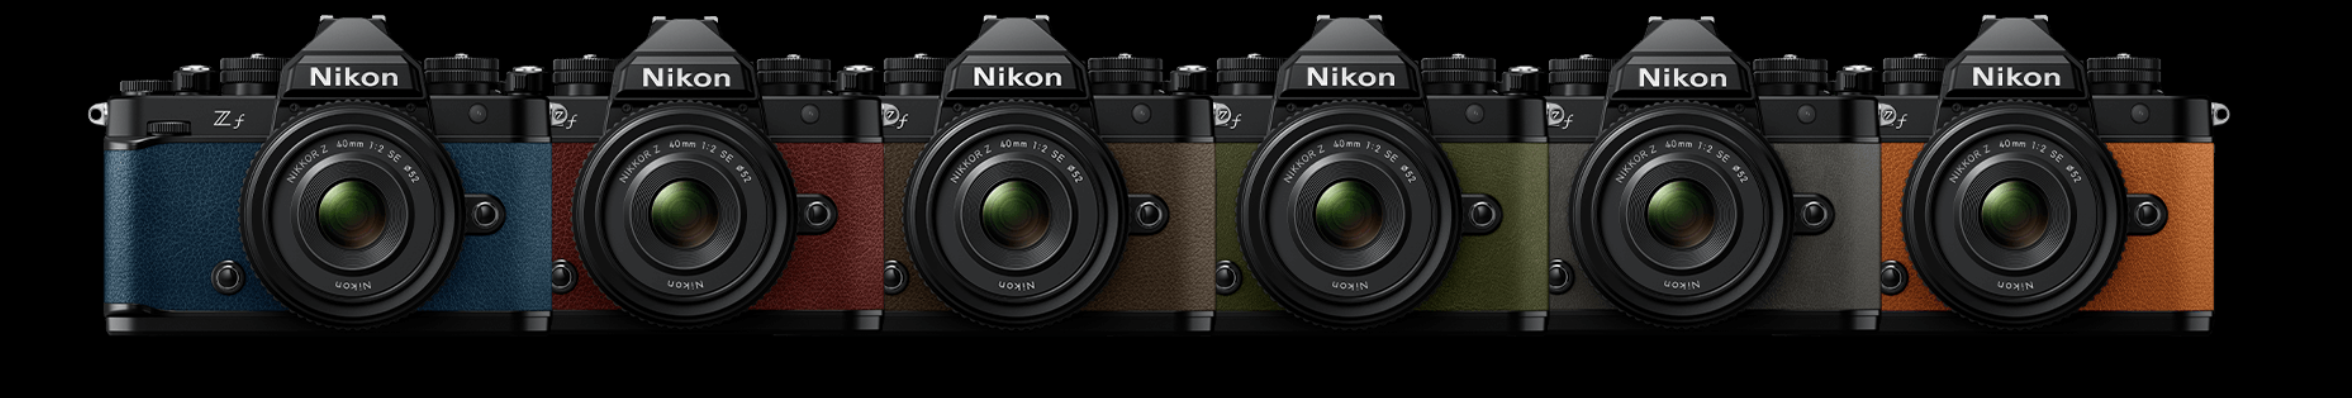 Nikon Announces New Z f Camera with 24MP Sensor and Retro, Tactile Dials